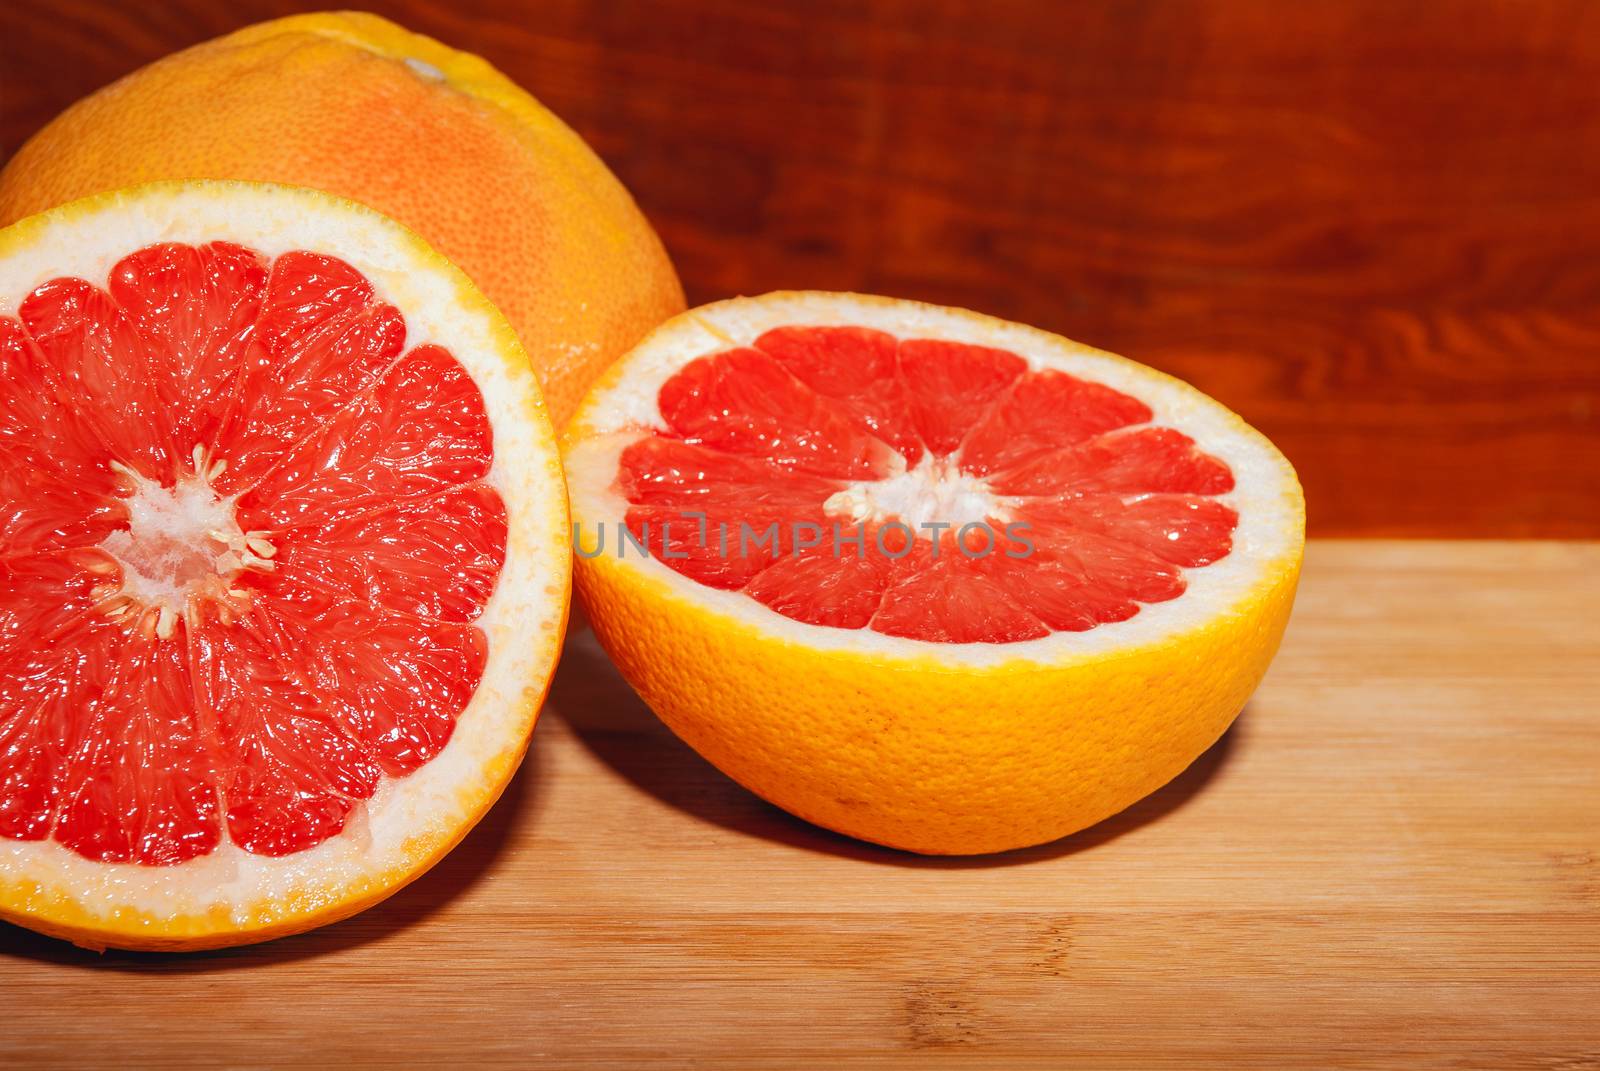 Slice red grapefruit by negativ